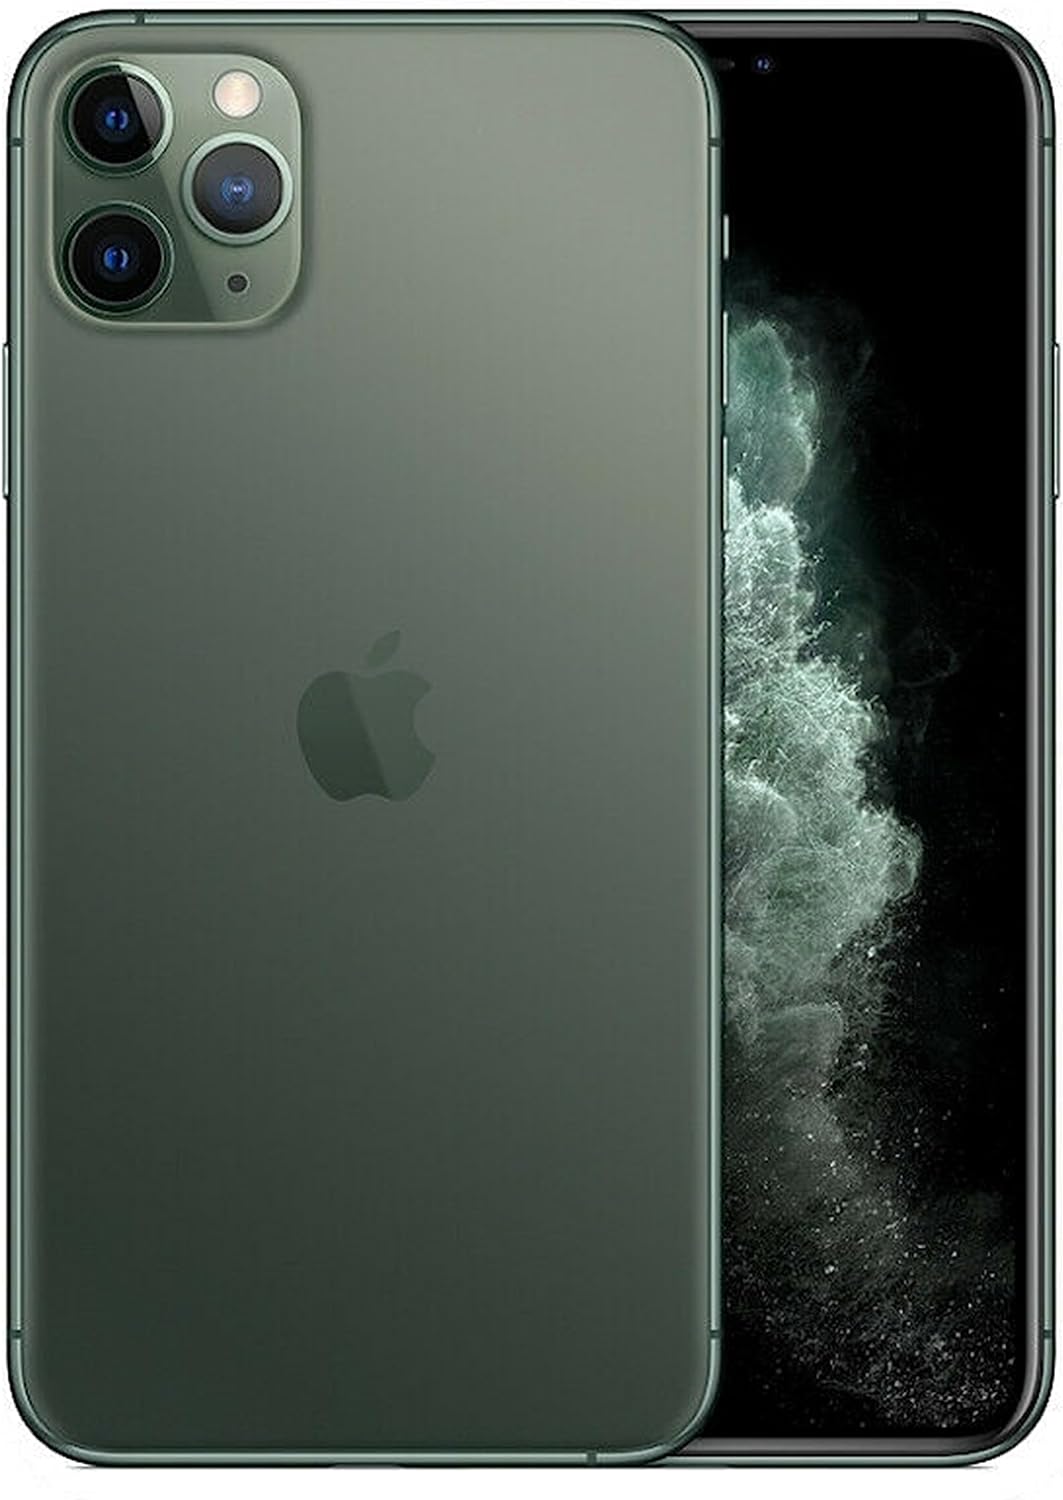 Apple iPhone 11 Pro Max US Version 512GB Midnight Green  - New York - Albany ID1554940